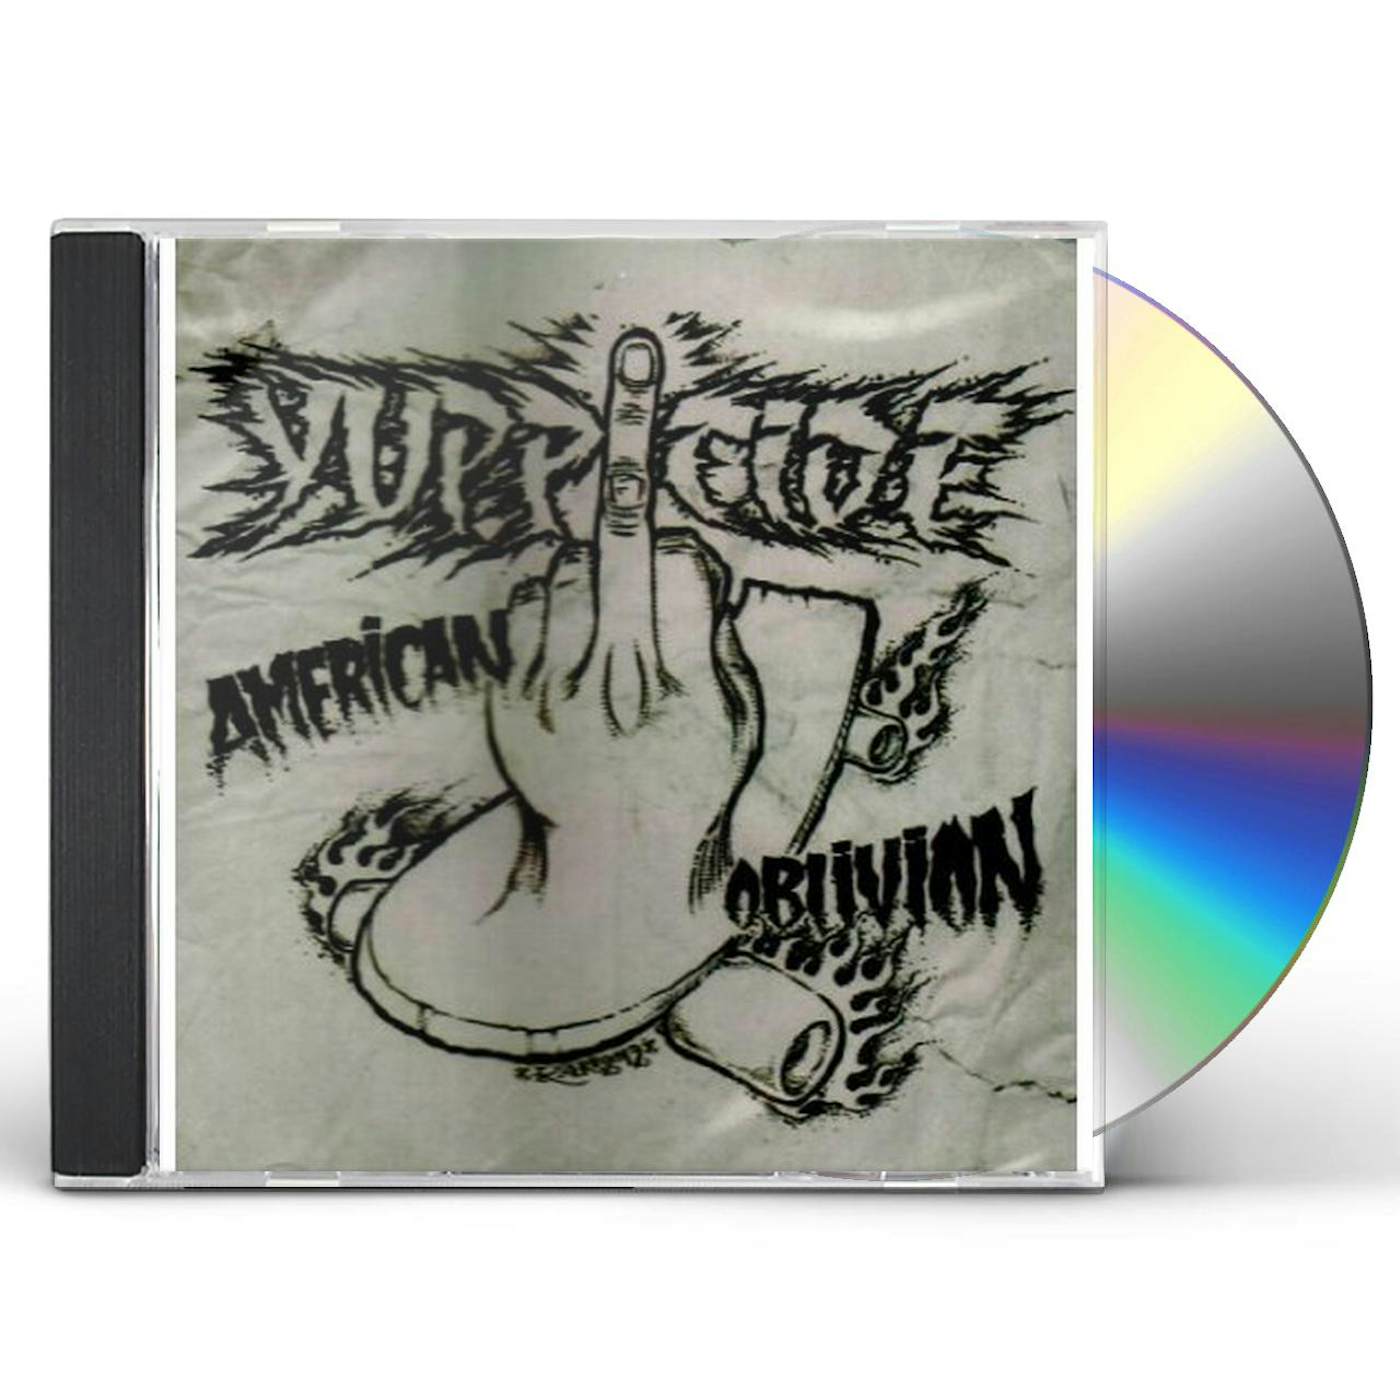 Yuppicide AMERICAN OBLIVION CD